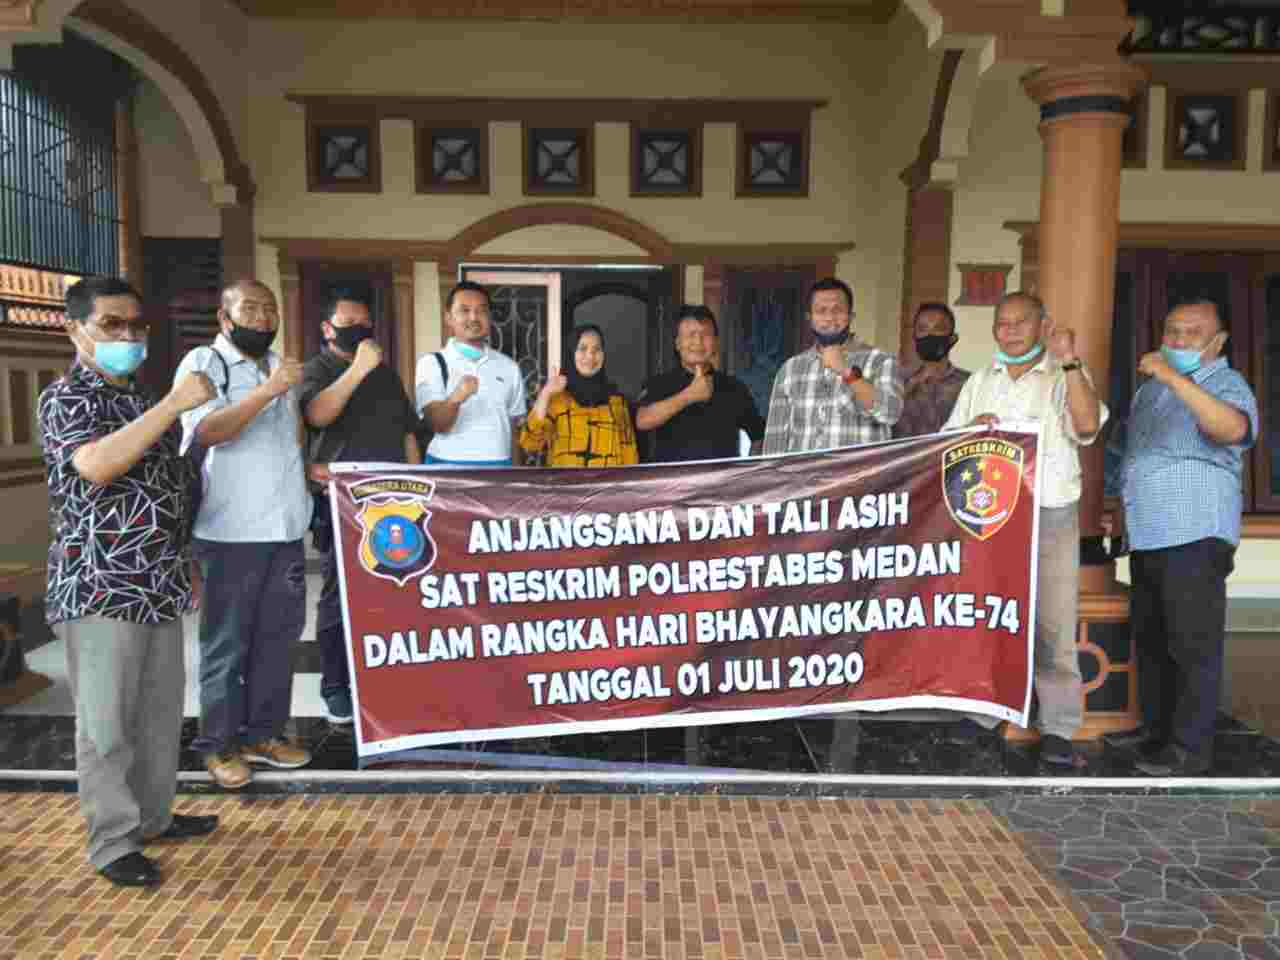 Sat Reskrim Polrestabes Medan Anjangsana ke Rumah Purnawirawan Polri